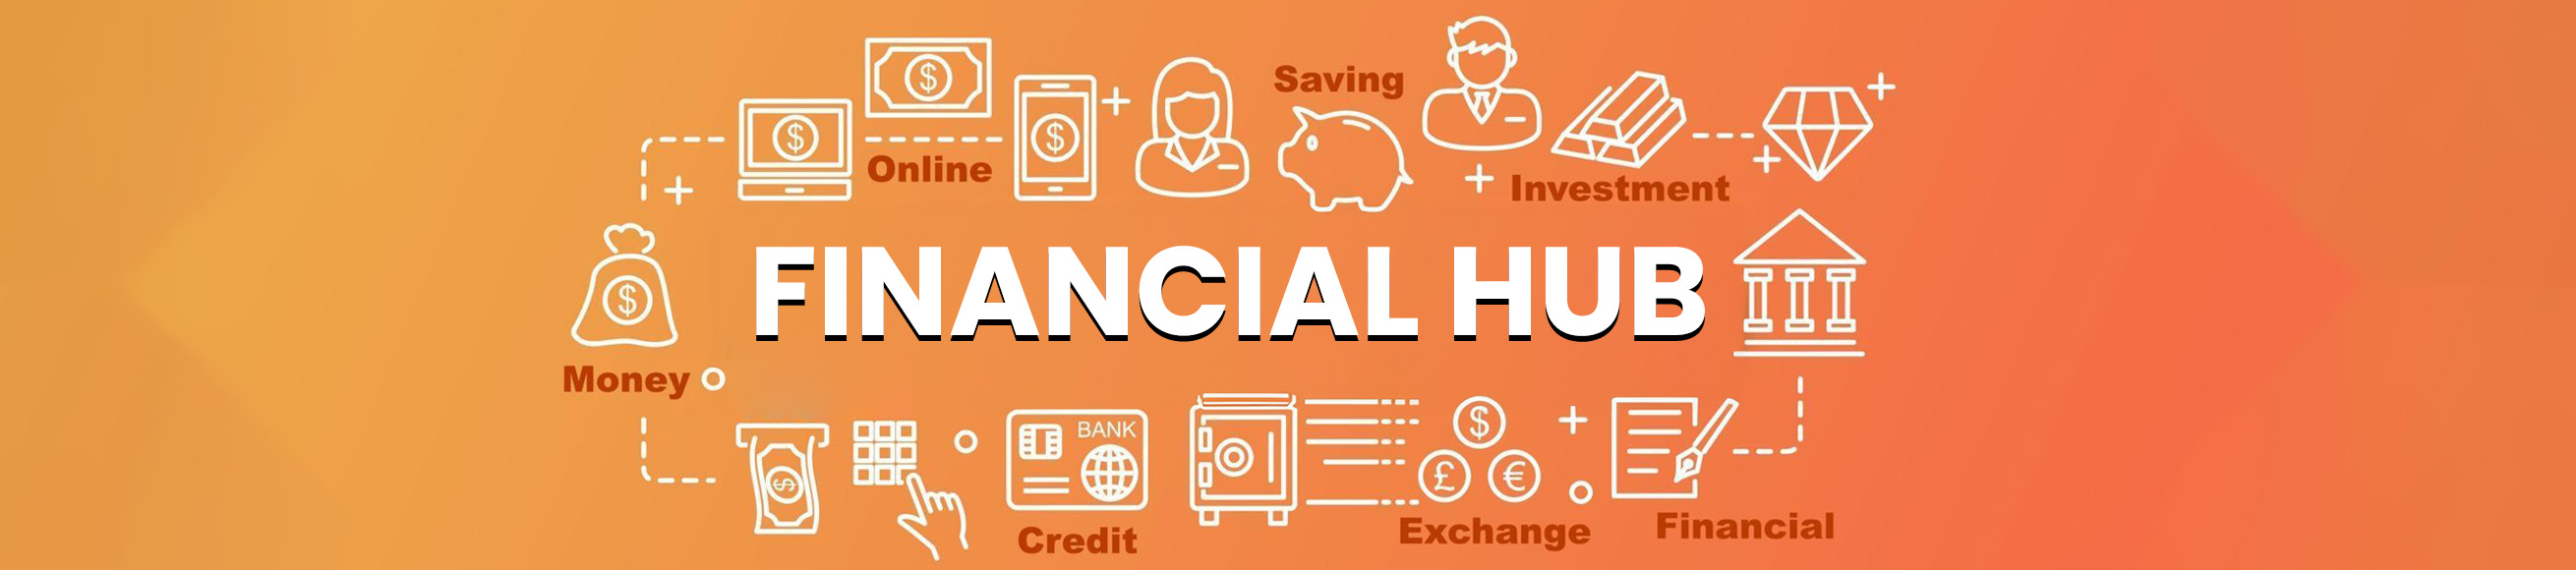 Financial Hub Offers